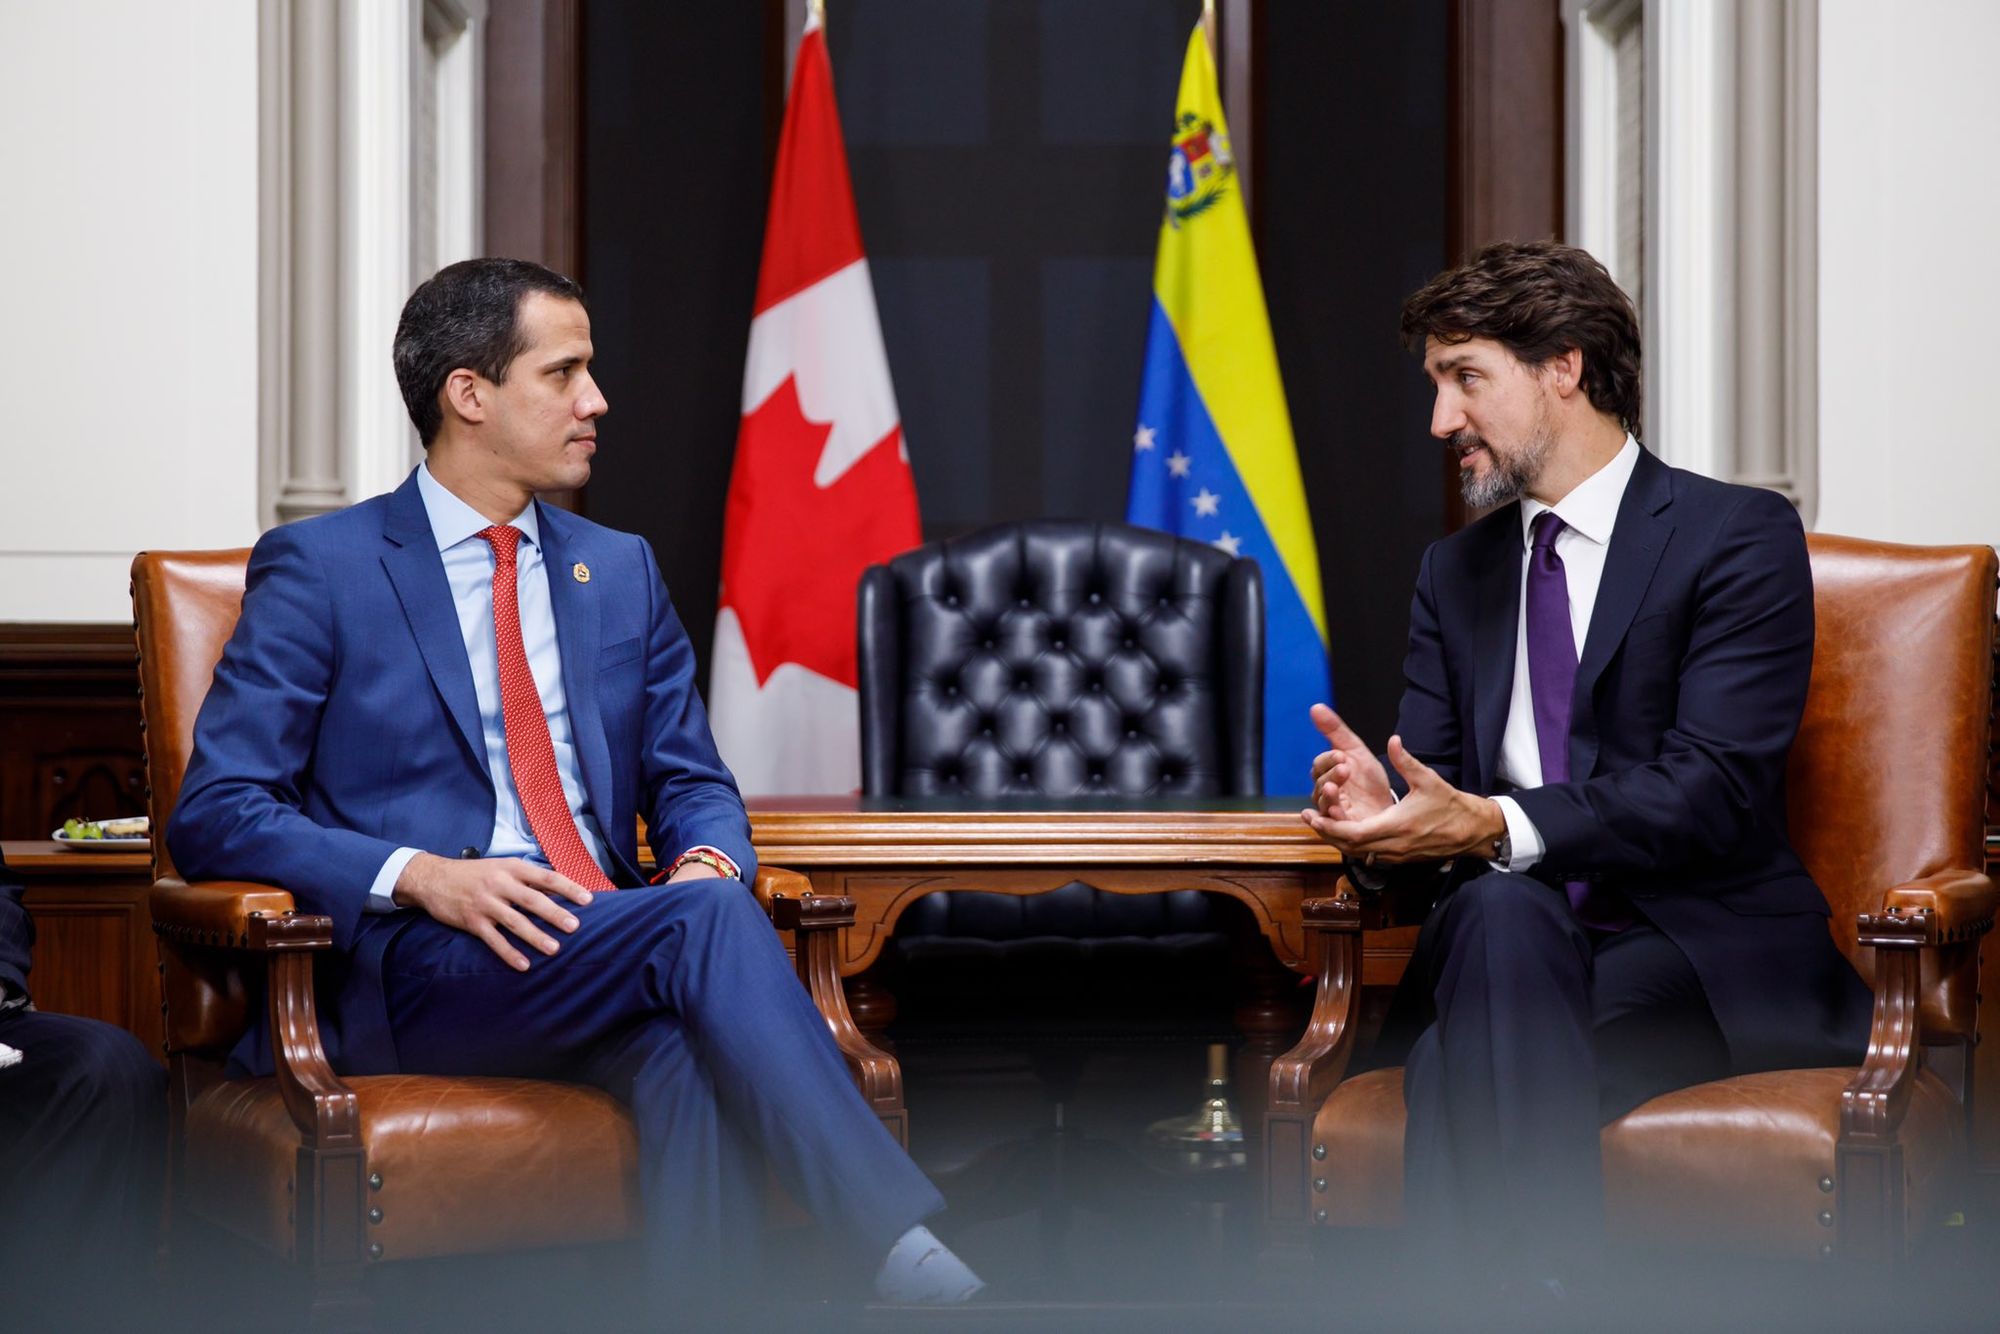 Canada Follows U.S. Lead, Quits Recognizing Juan Guaidó as Venezuela’s ‘Interim President’